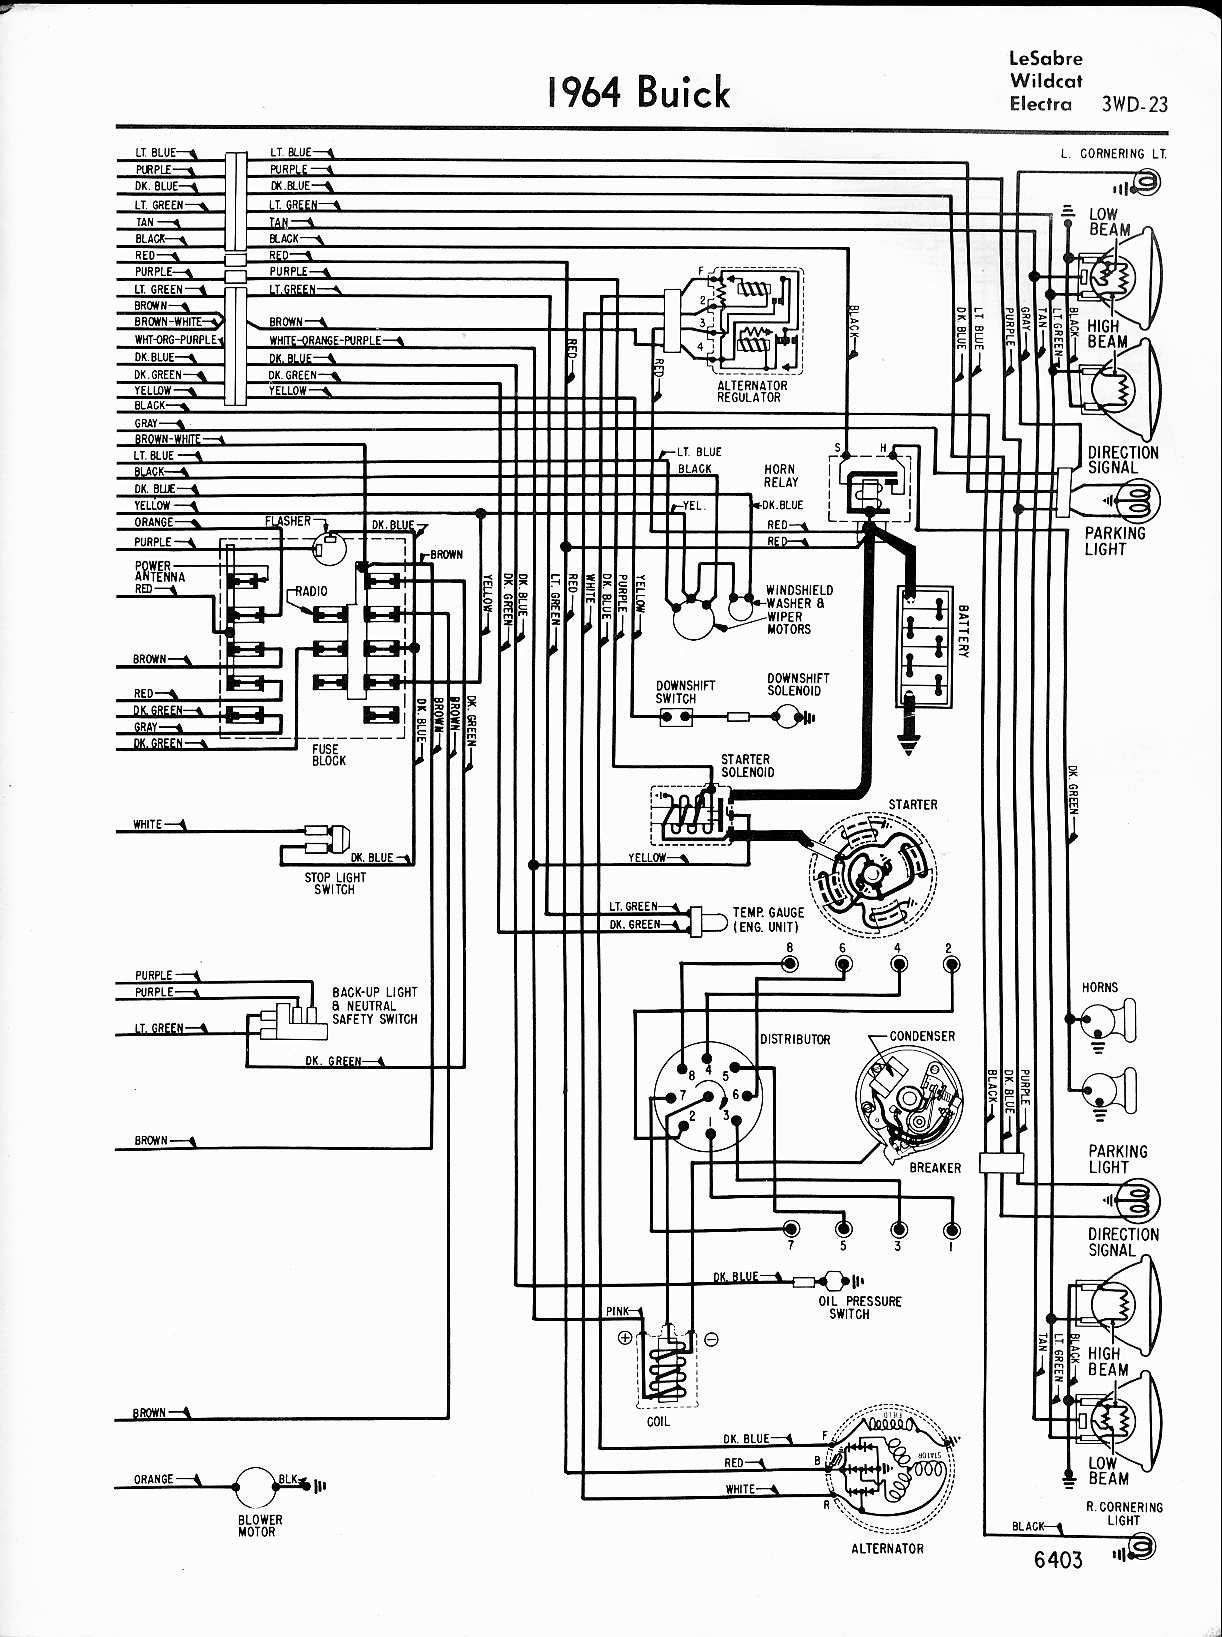 2002 Buick Century Wiring Diagram Buick Reatta Wiring Diagram Buick Free Engine Image for User Manual